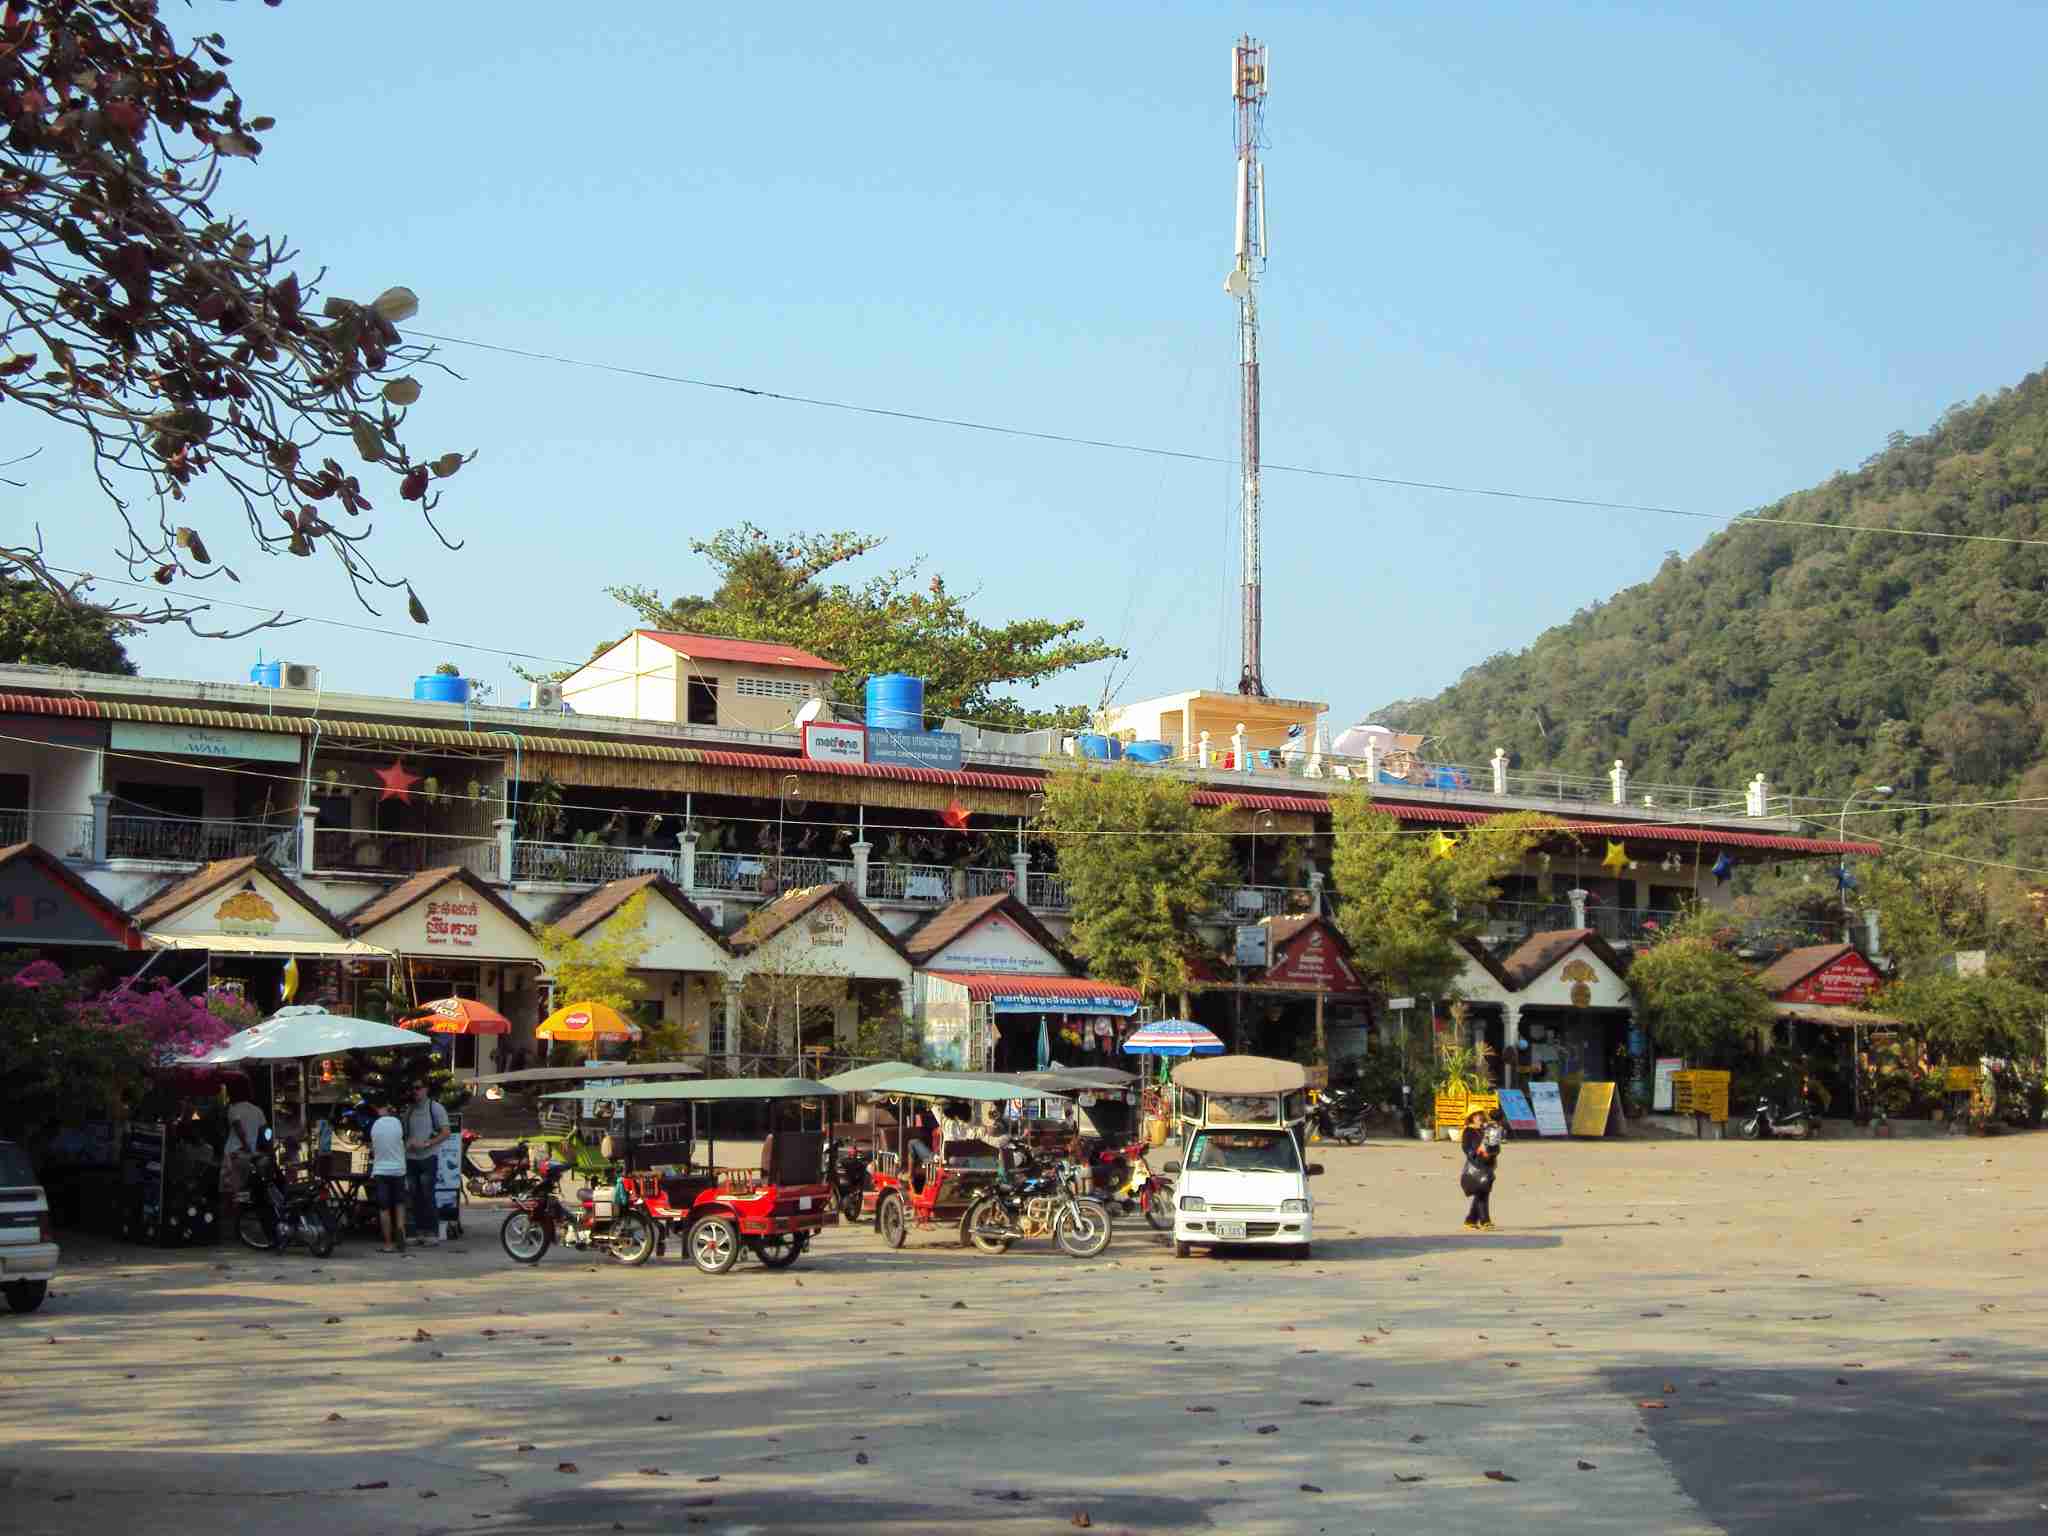 Central plaza in Kep